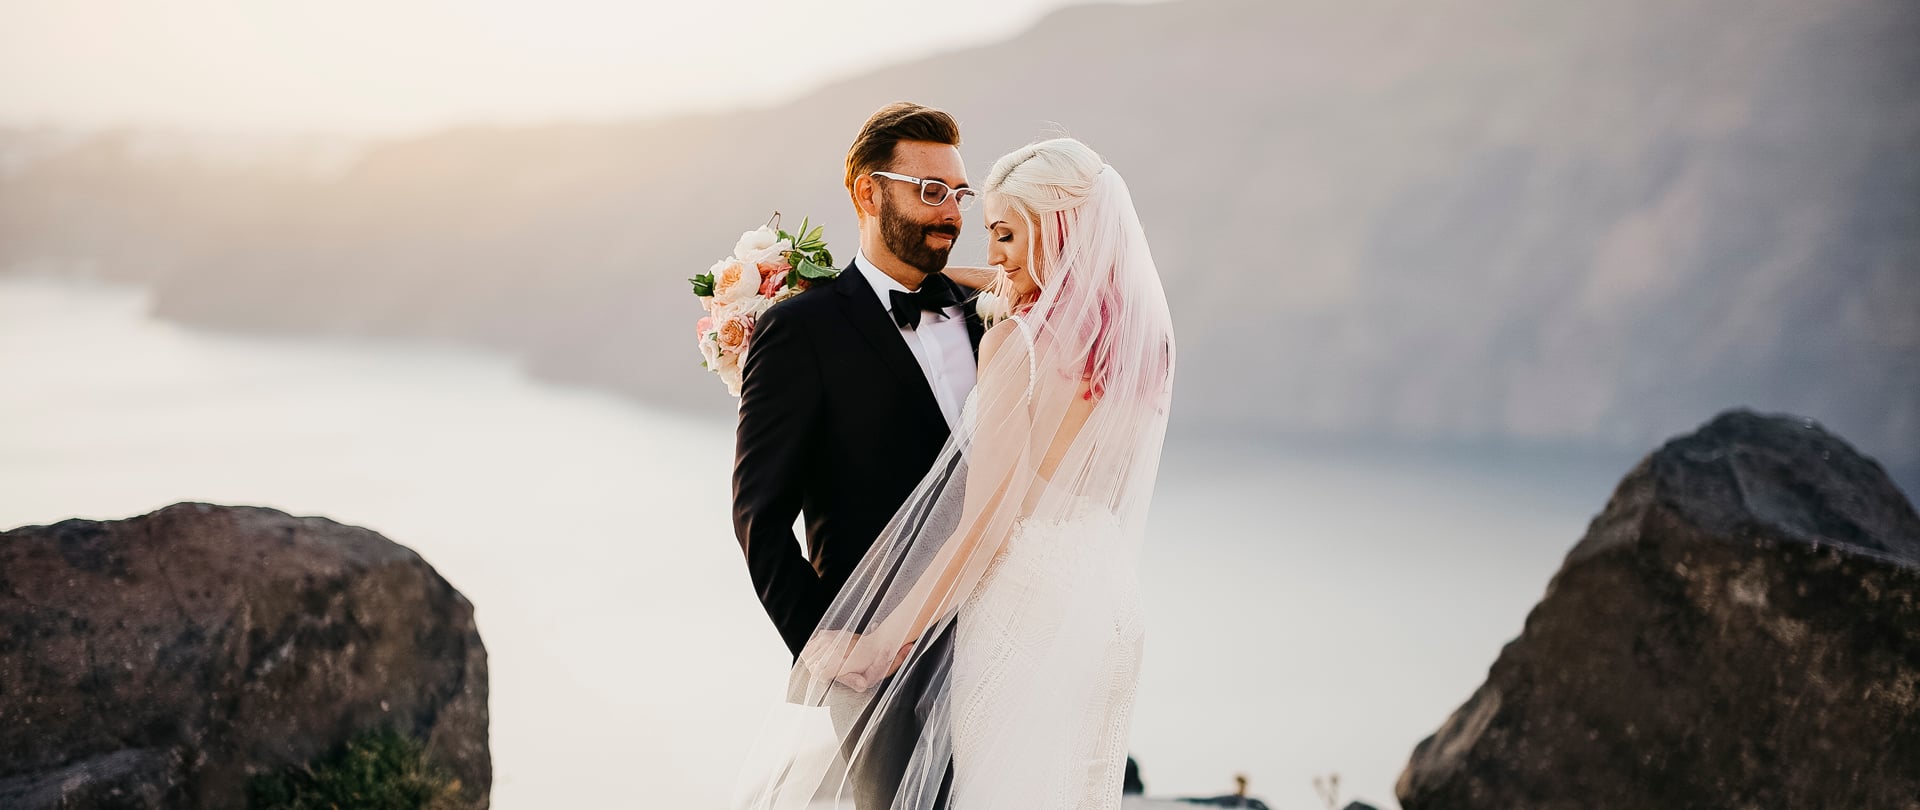 Chelsea & Jayse Wedding Video Filmed atSantorini,Greece